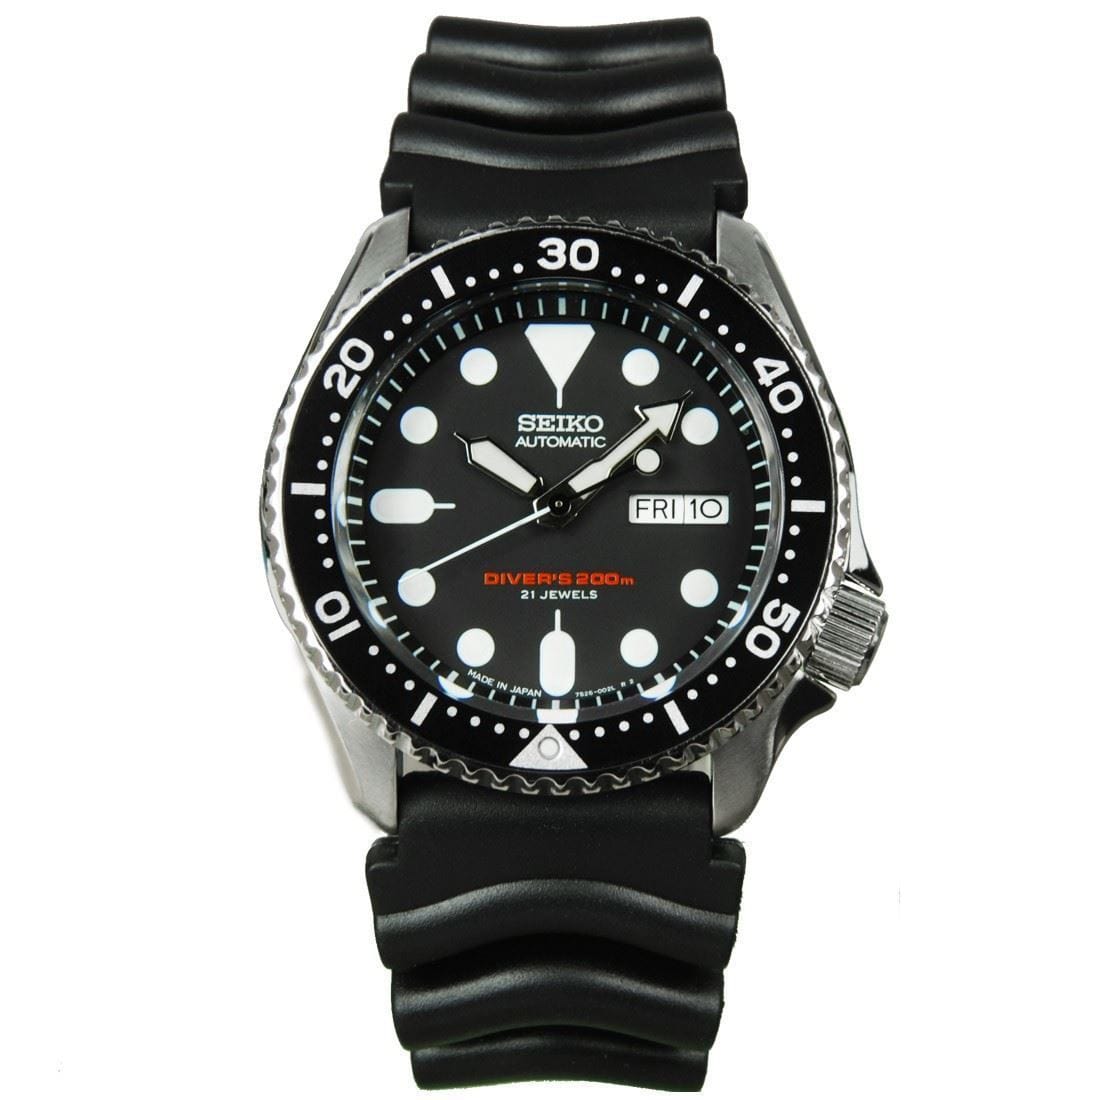 Seiko Japan Made Automatic Dive Watch SKX007 SKX007J1